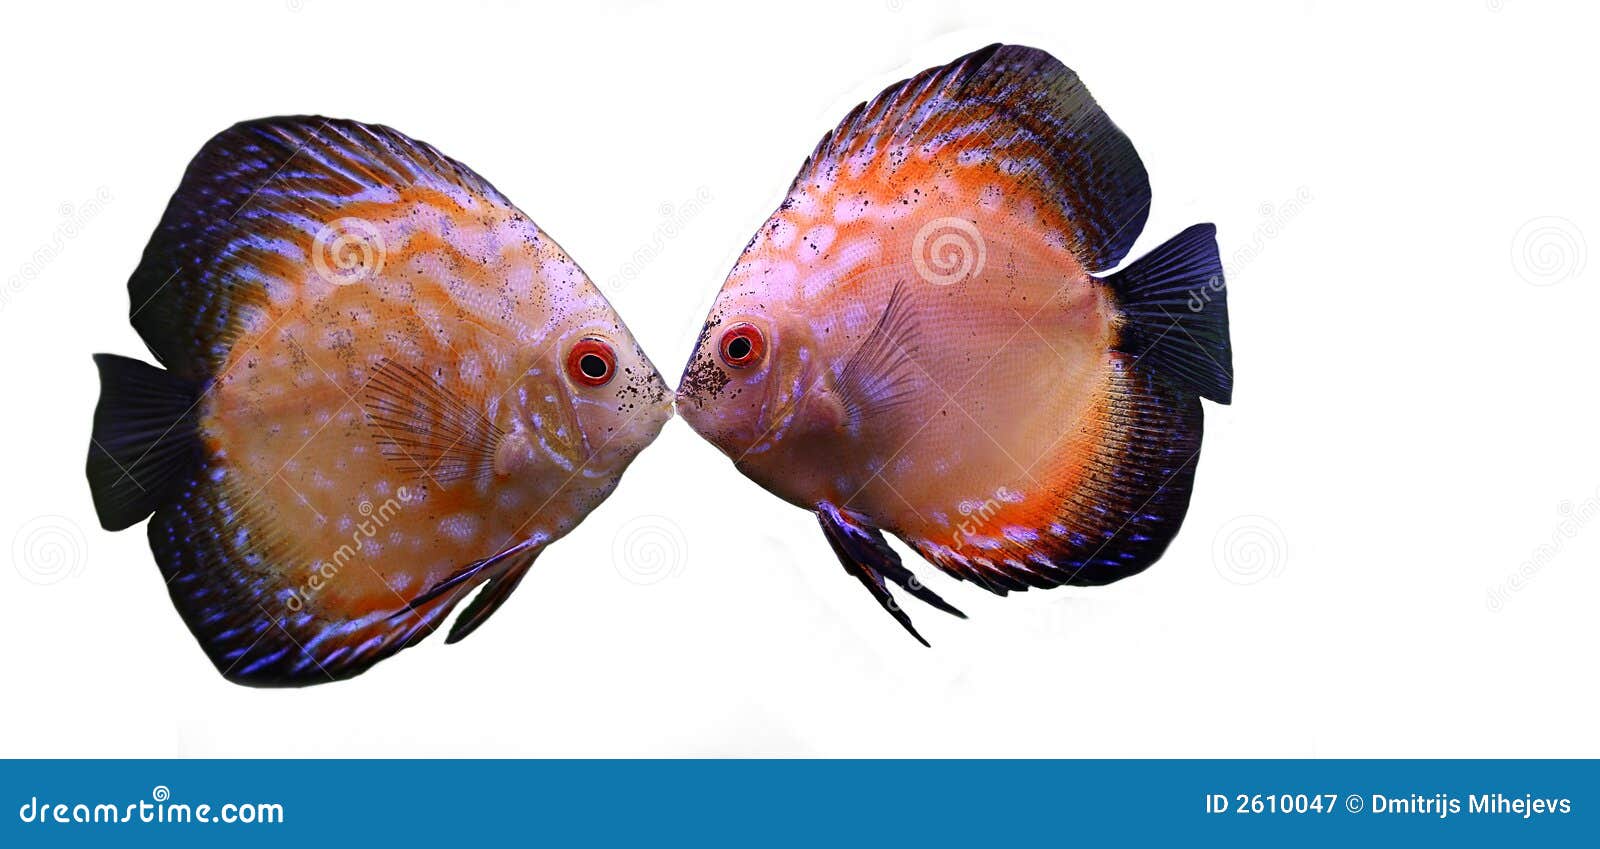 Fish kiss stock image. Image of animal, love, freshwater